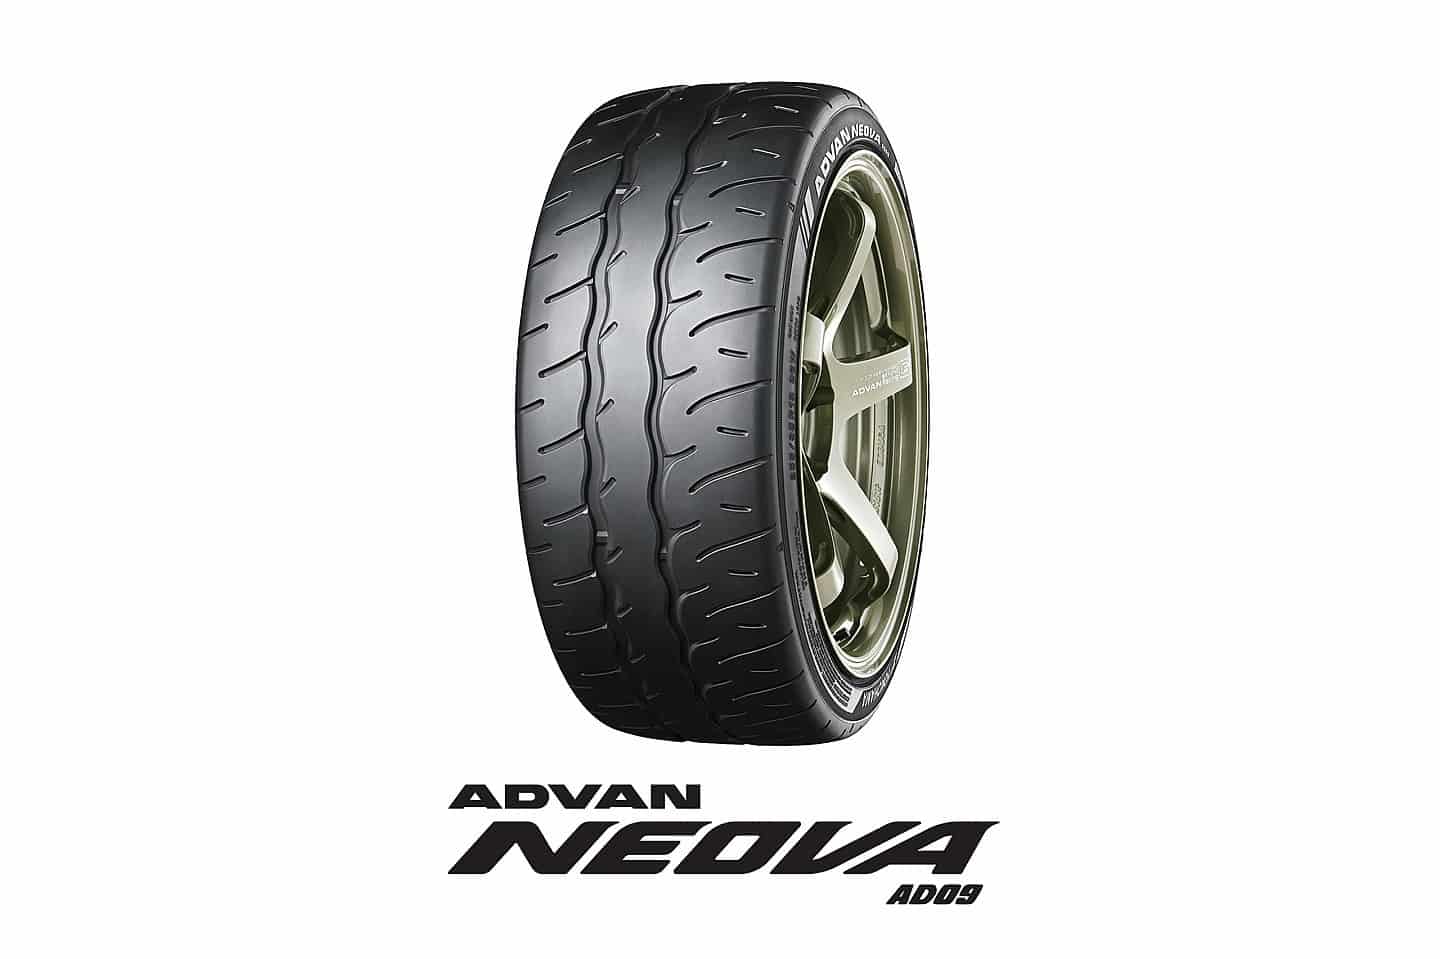 New Sticky Tires! Advan Neova AD09